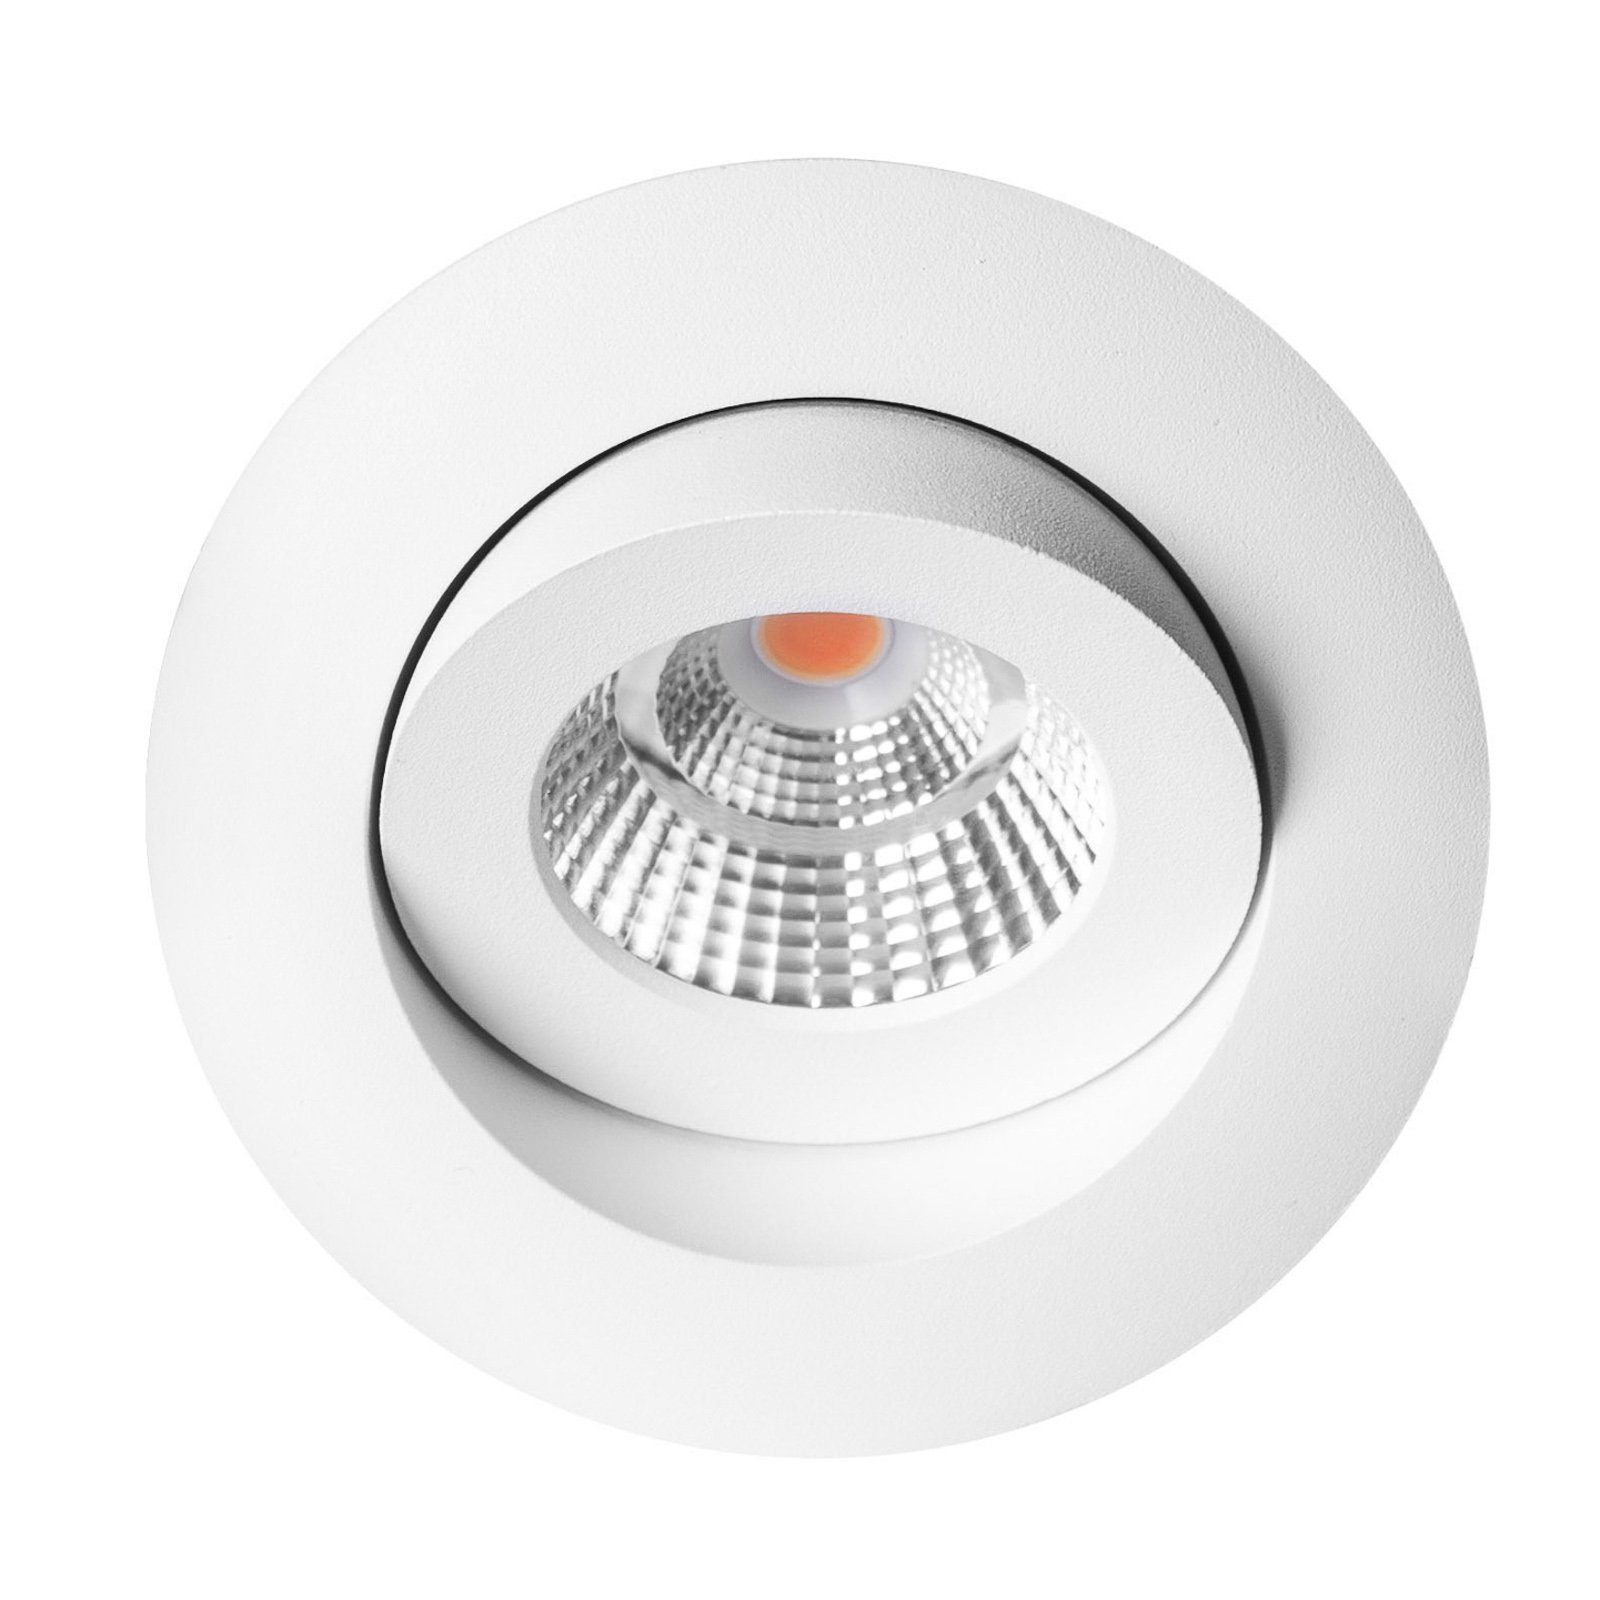 SLC One 360° LED downlight dim-to-warm white